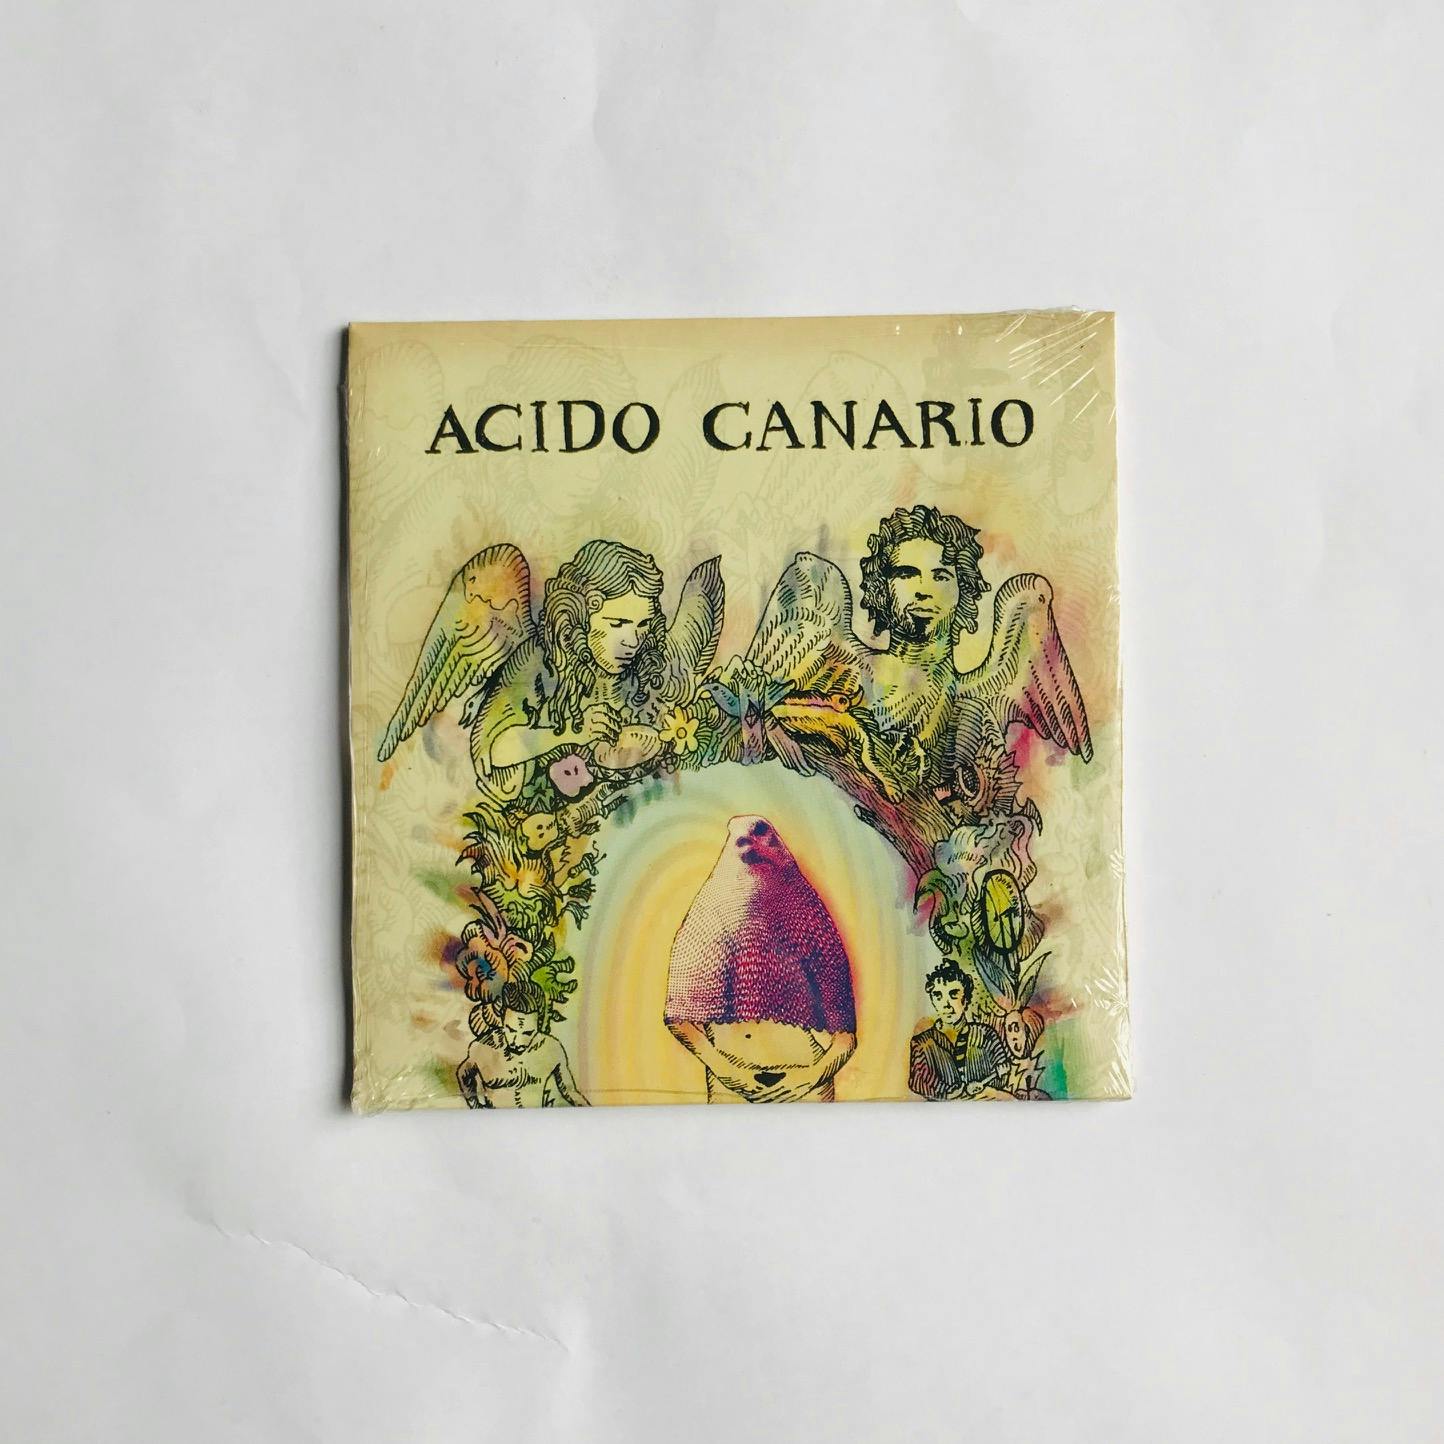 "IV MVNDANO", CD de Ácido Canario